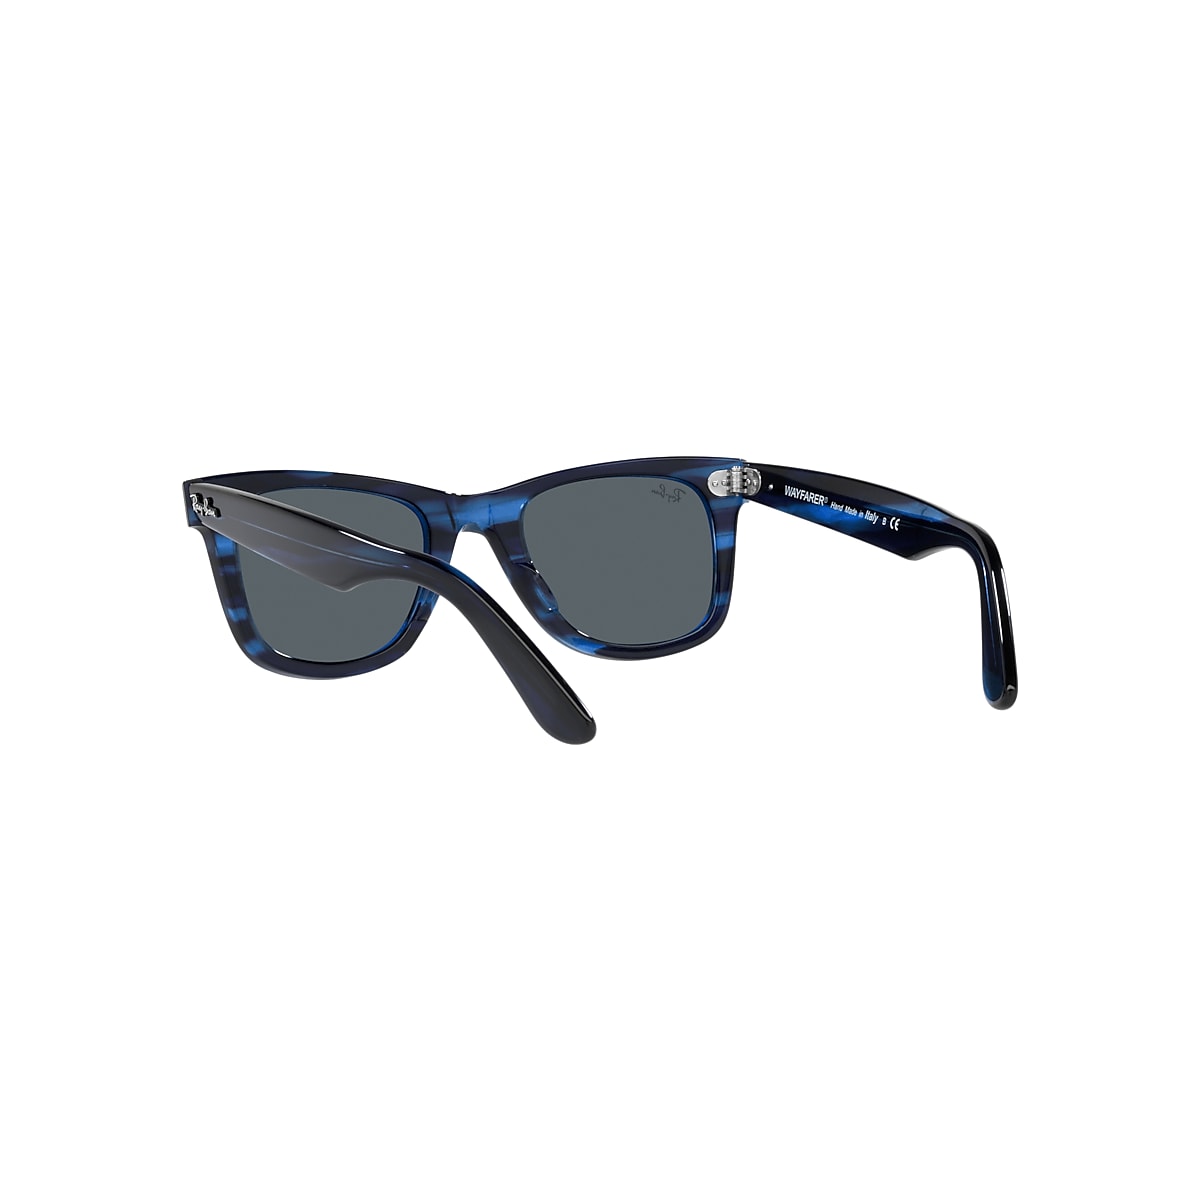 ORIGINAL WAYFARER BIO-BASED Sunglasses in Striped Blue and 